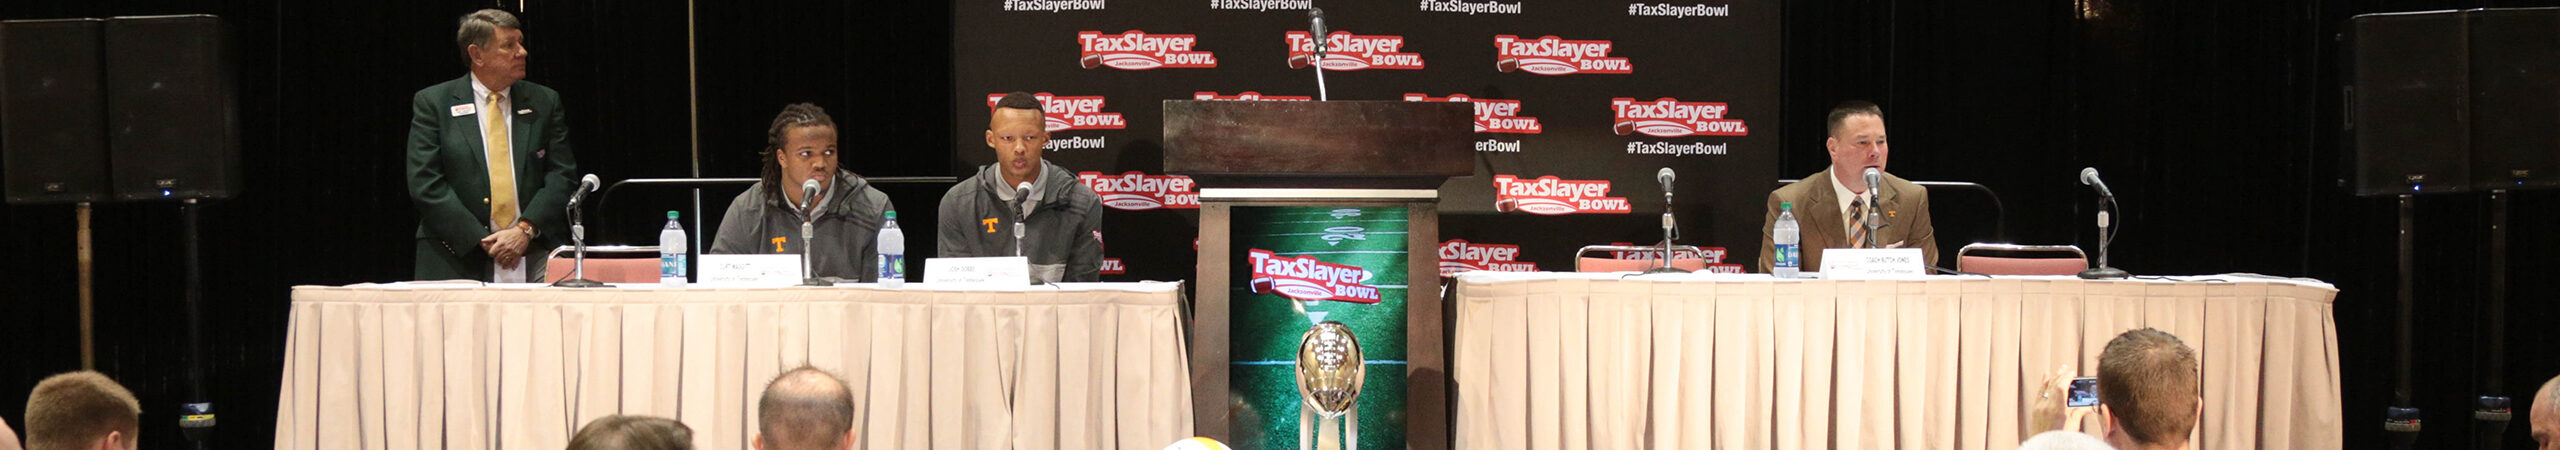 TaxSlayer Bowl Press Conference